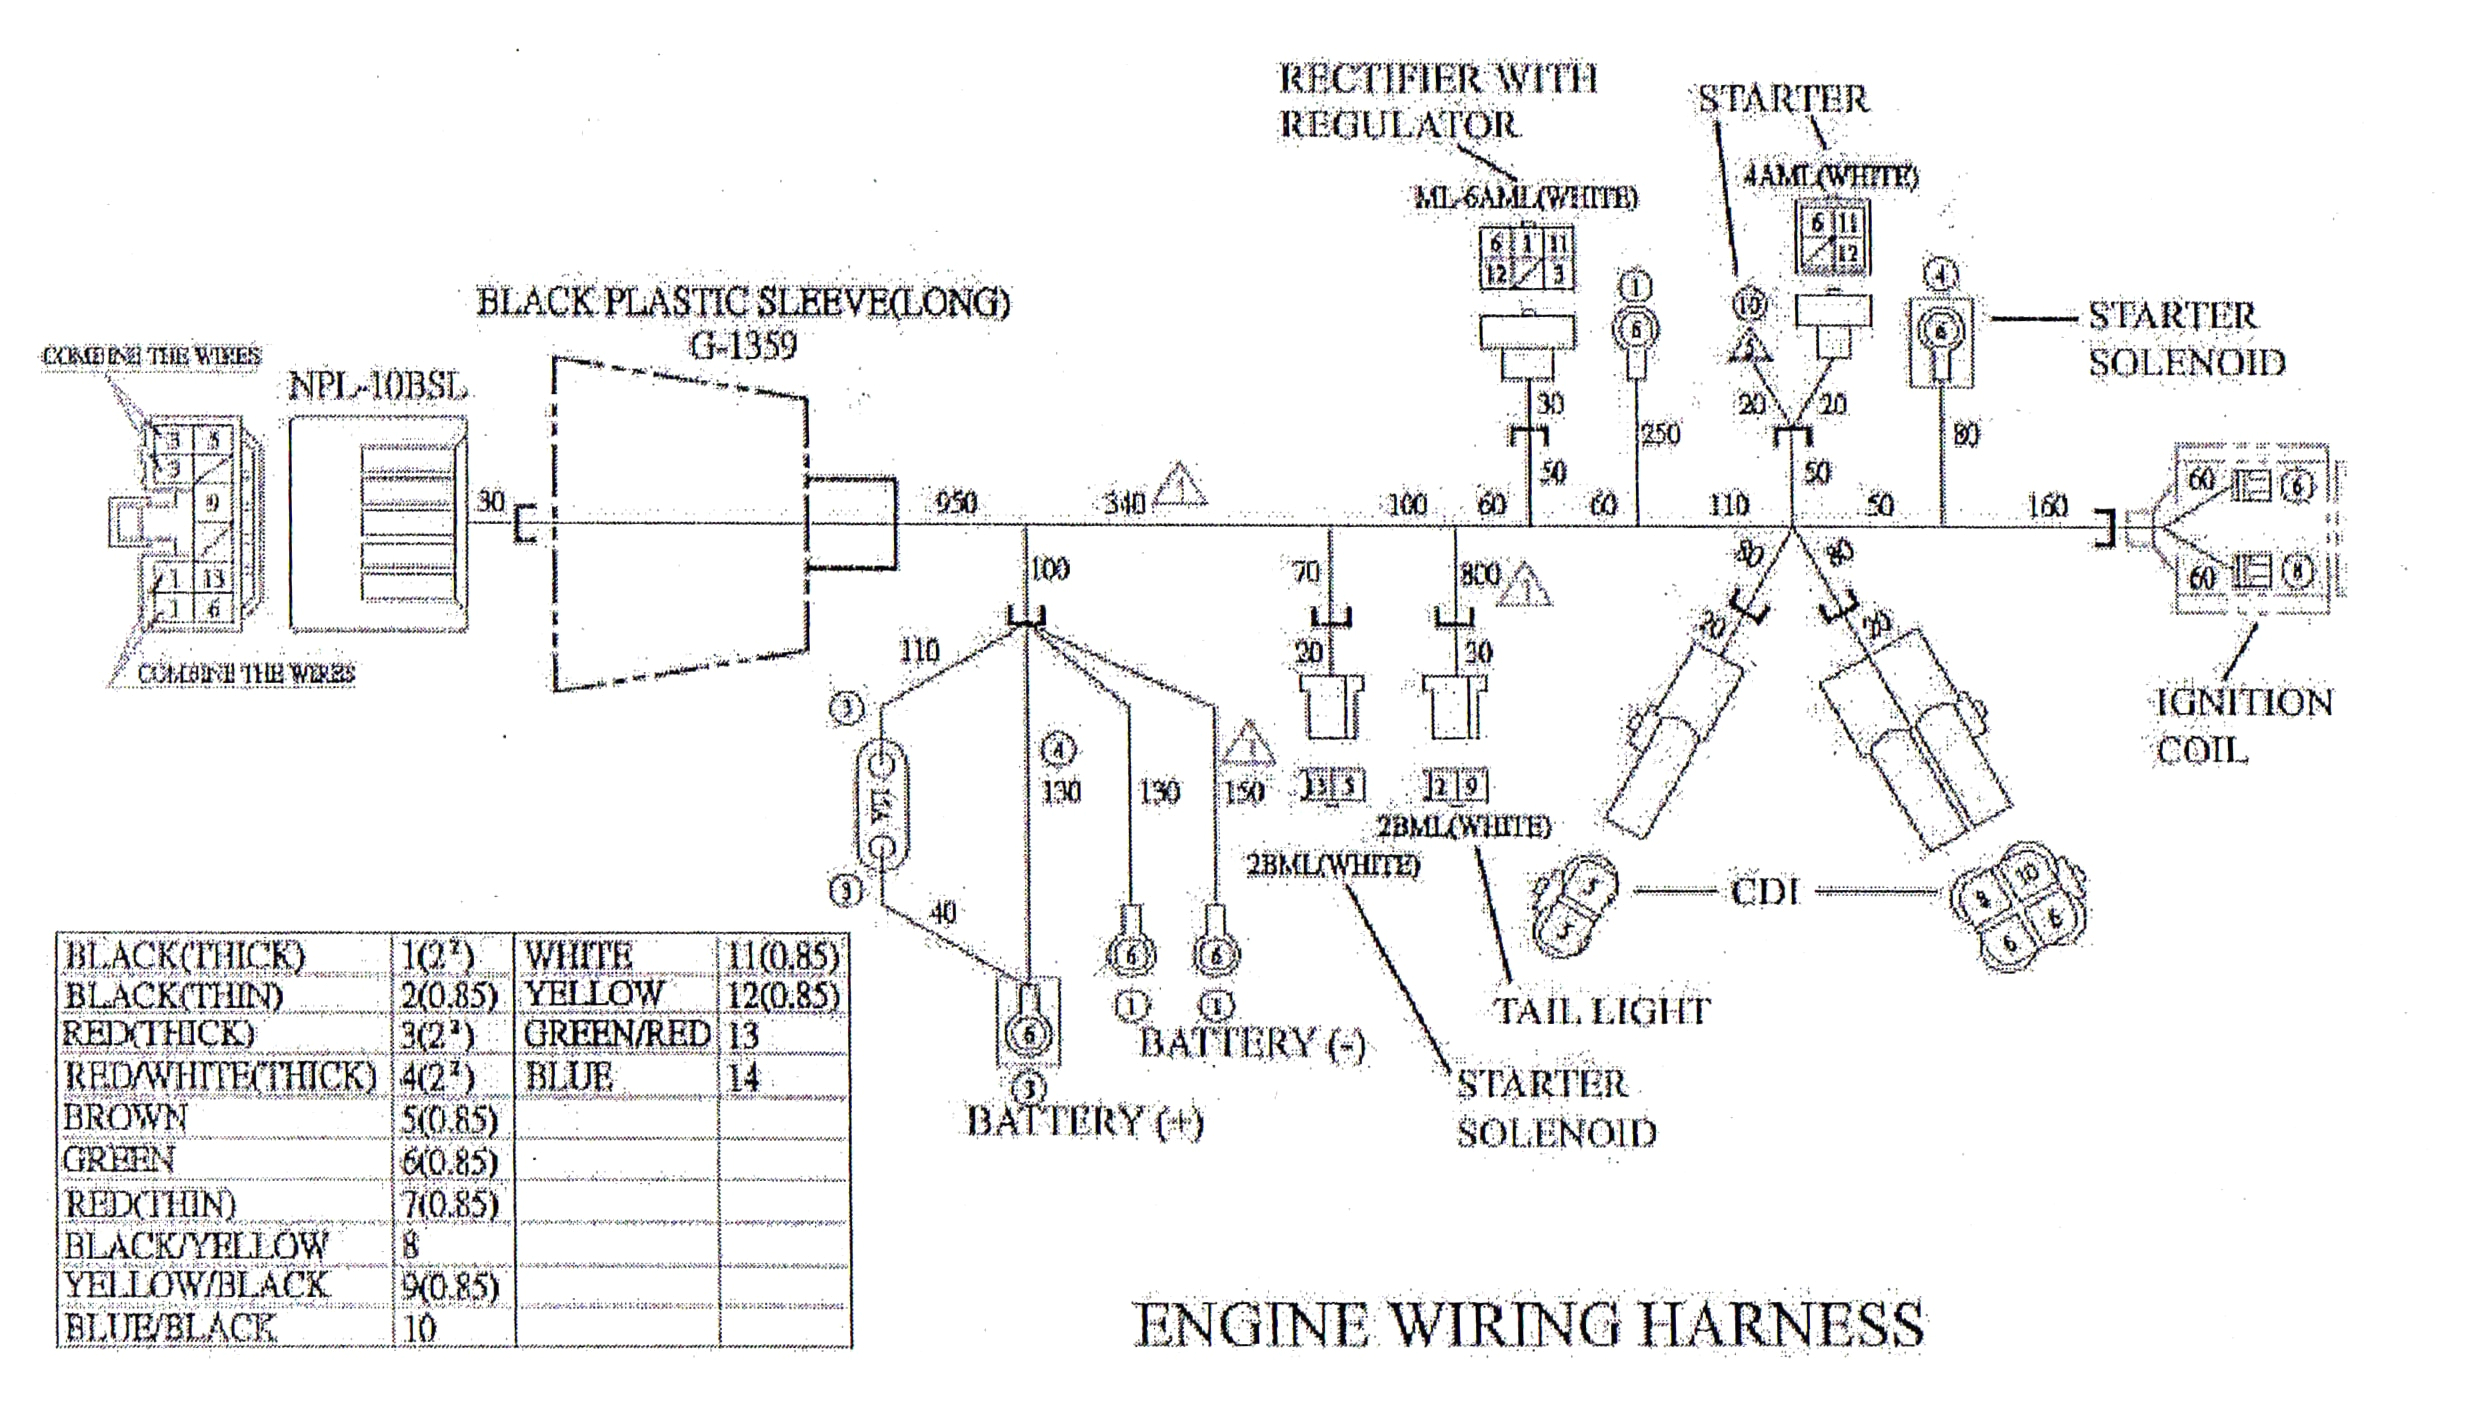 gx 150 wiring diagram wiring diagrams data gx 150 wiring diagram